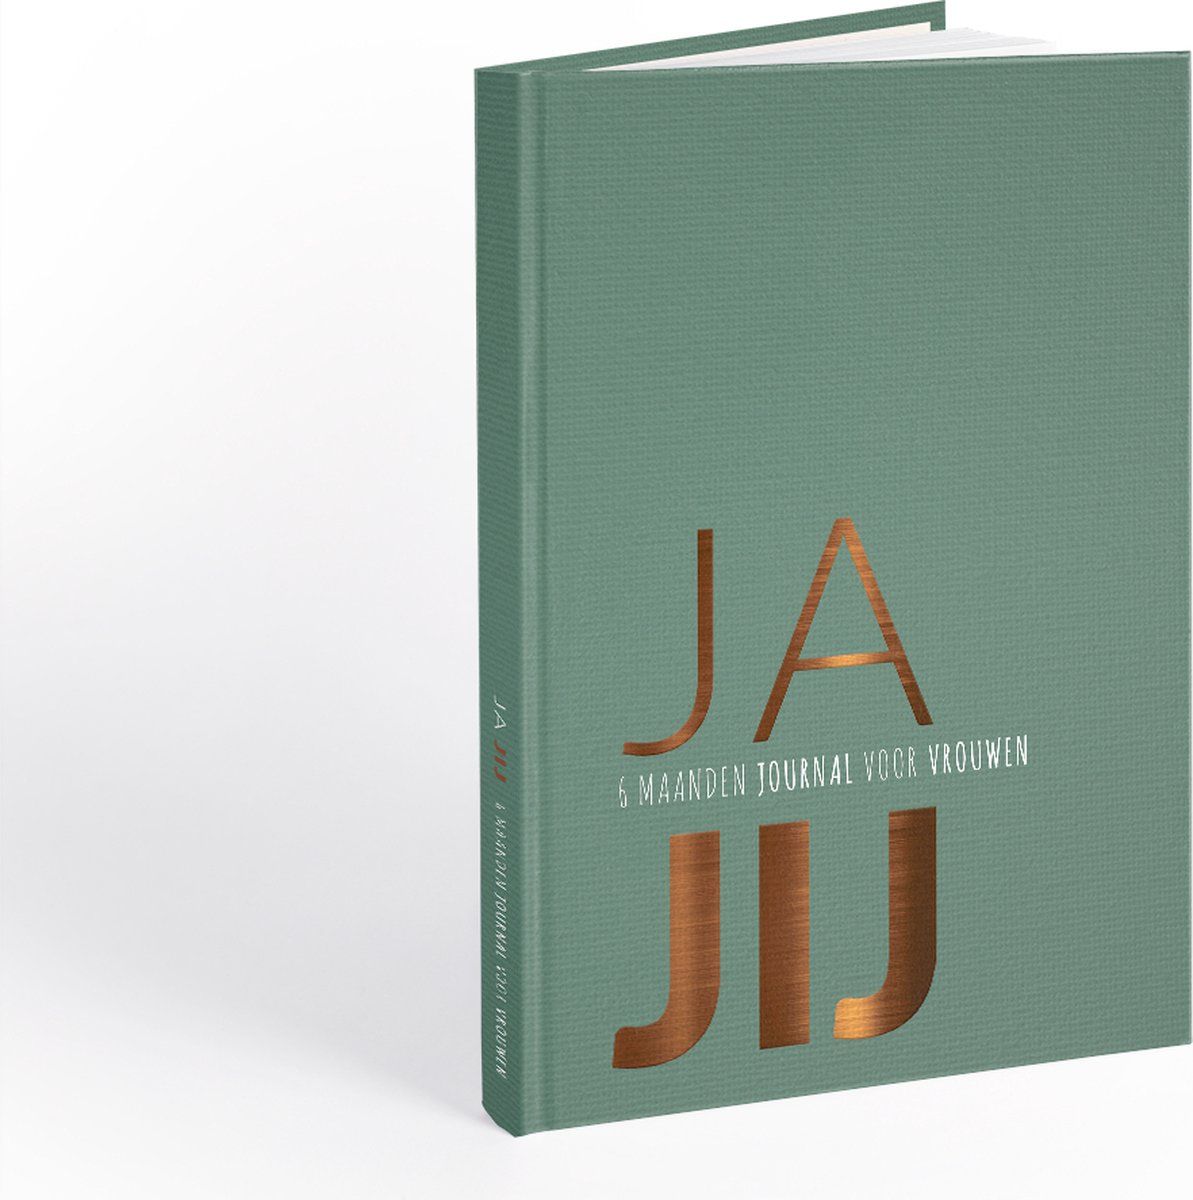 Boekrecensie JA JIJ Journal Groen - Invuldagboek/Journals